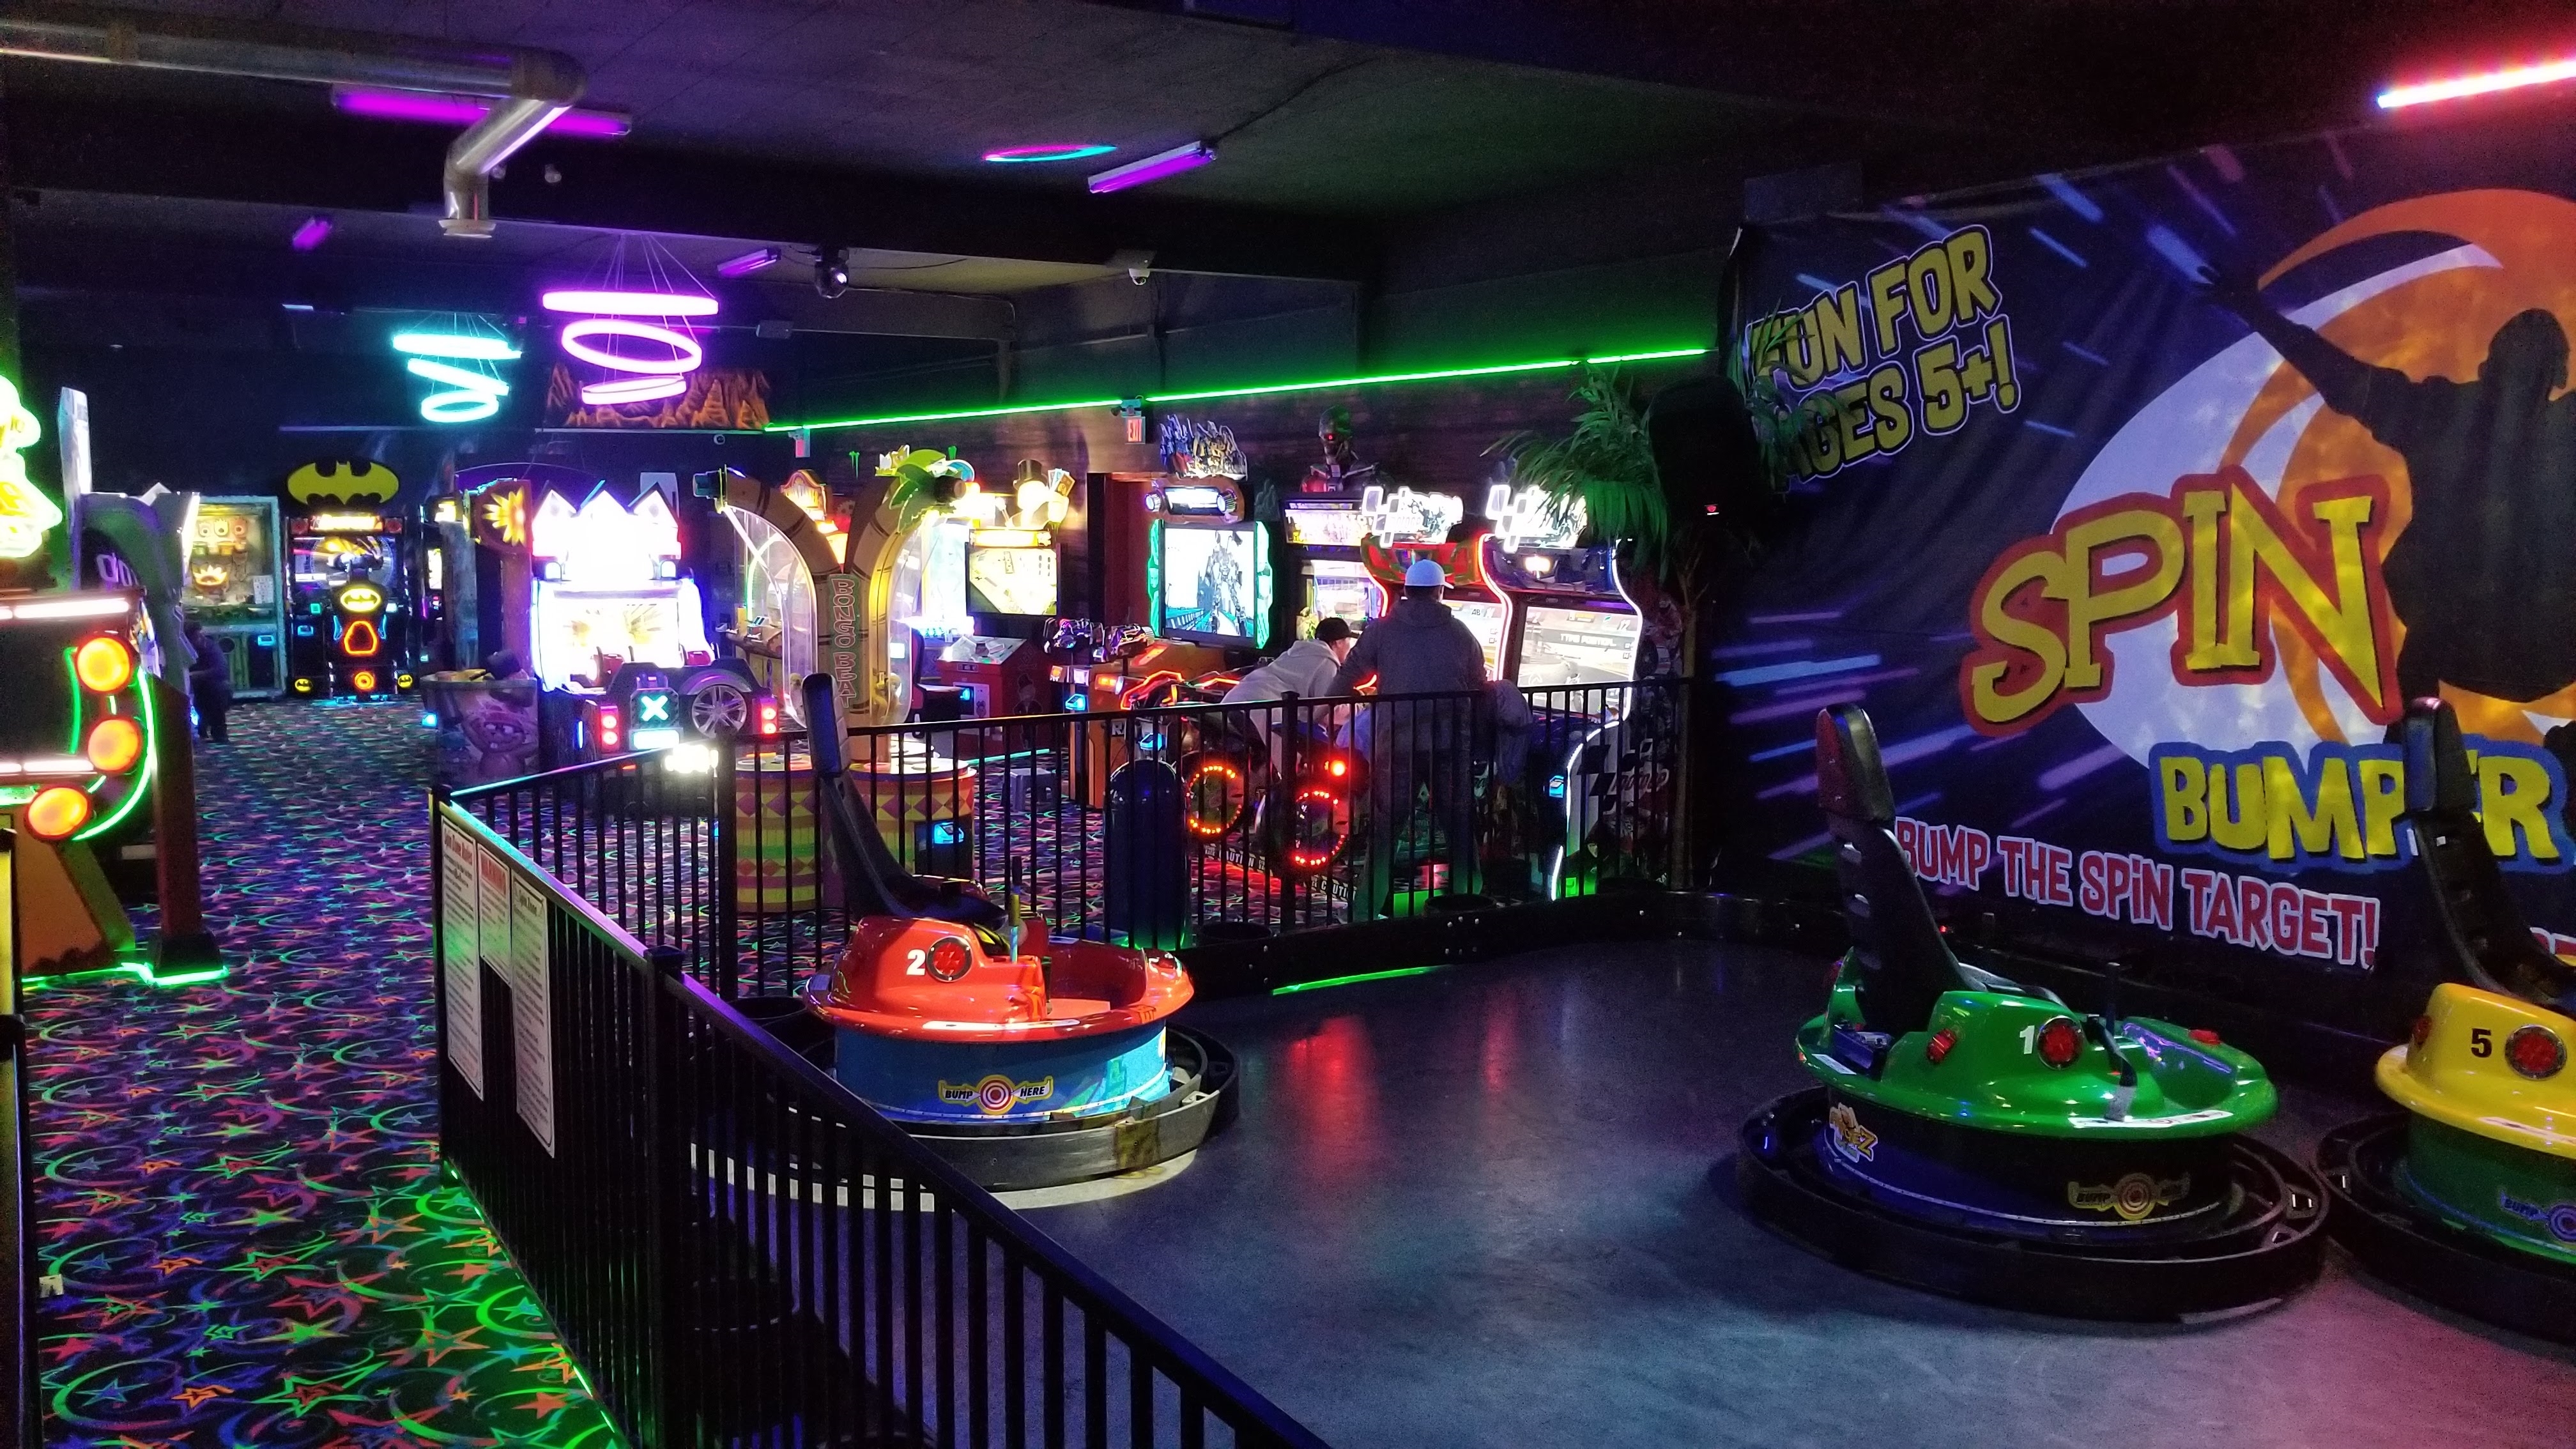 The Fun Factor Fun Centre - Laser Tag  Bowling Bumper Cars